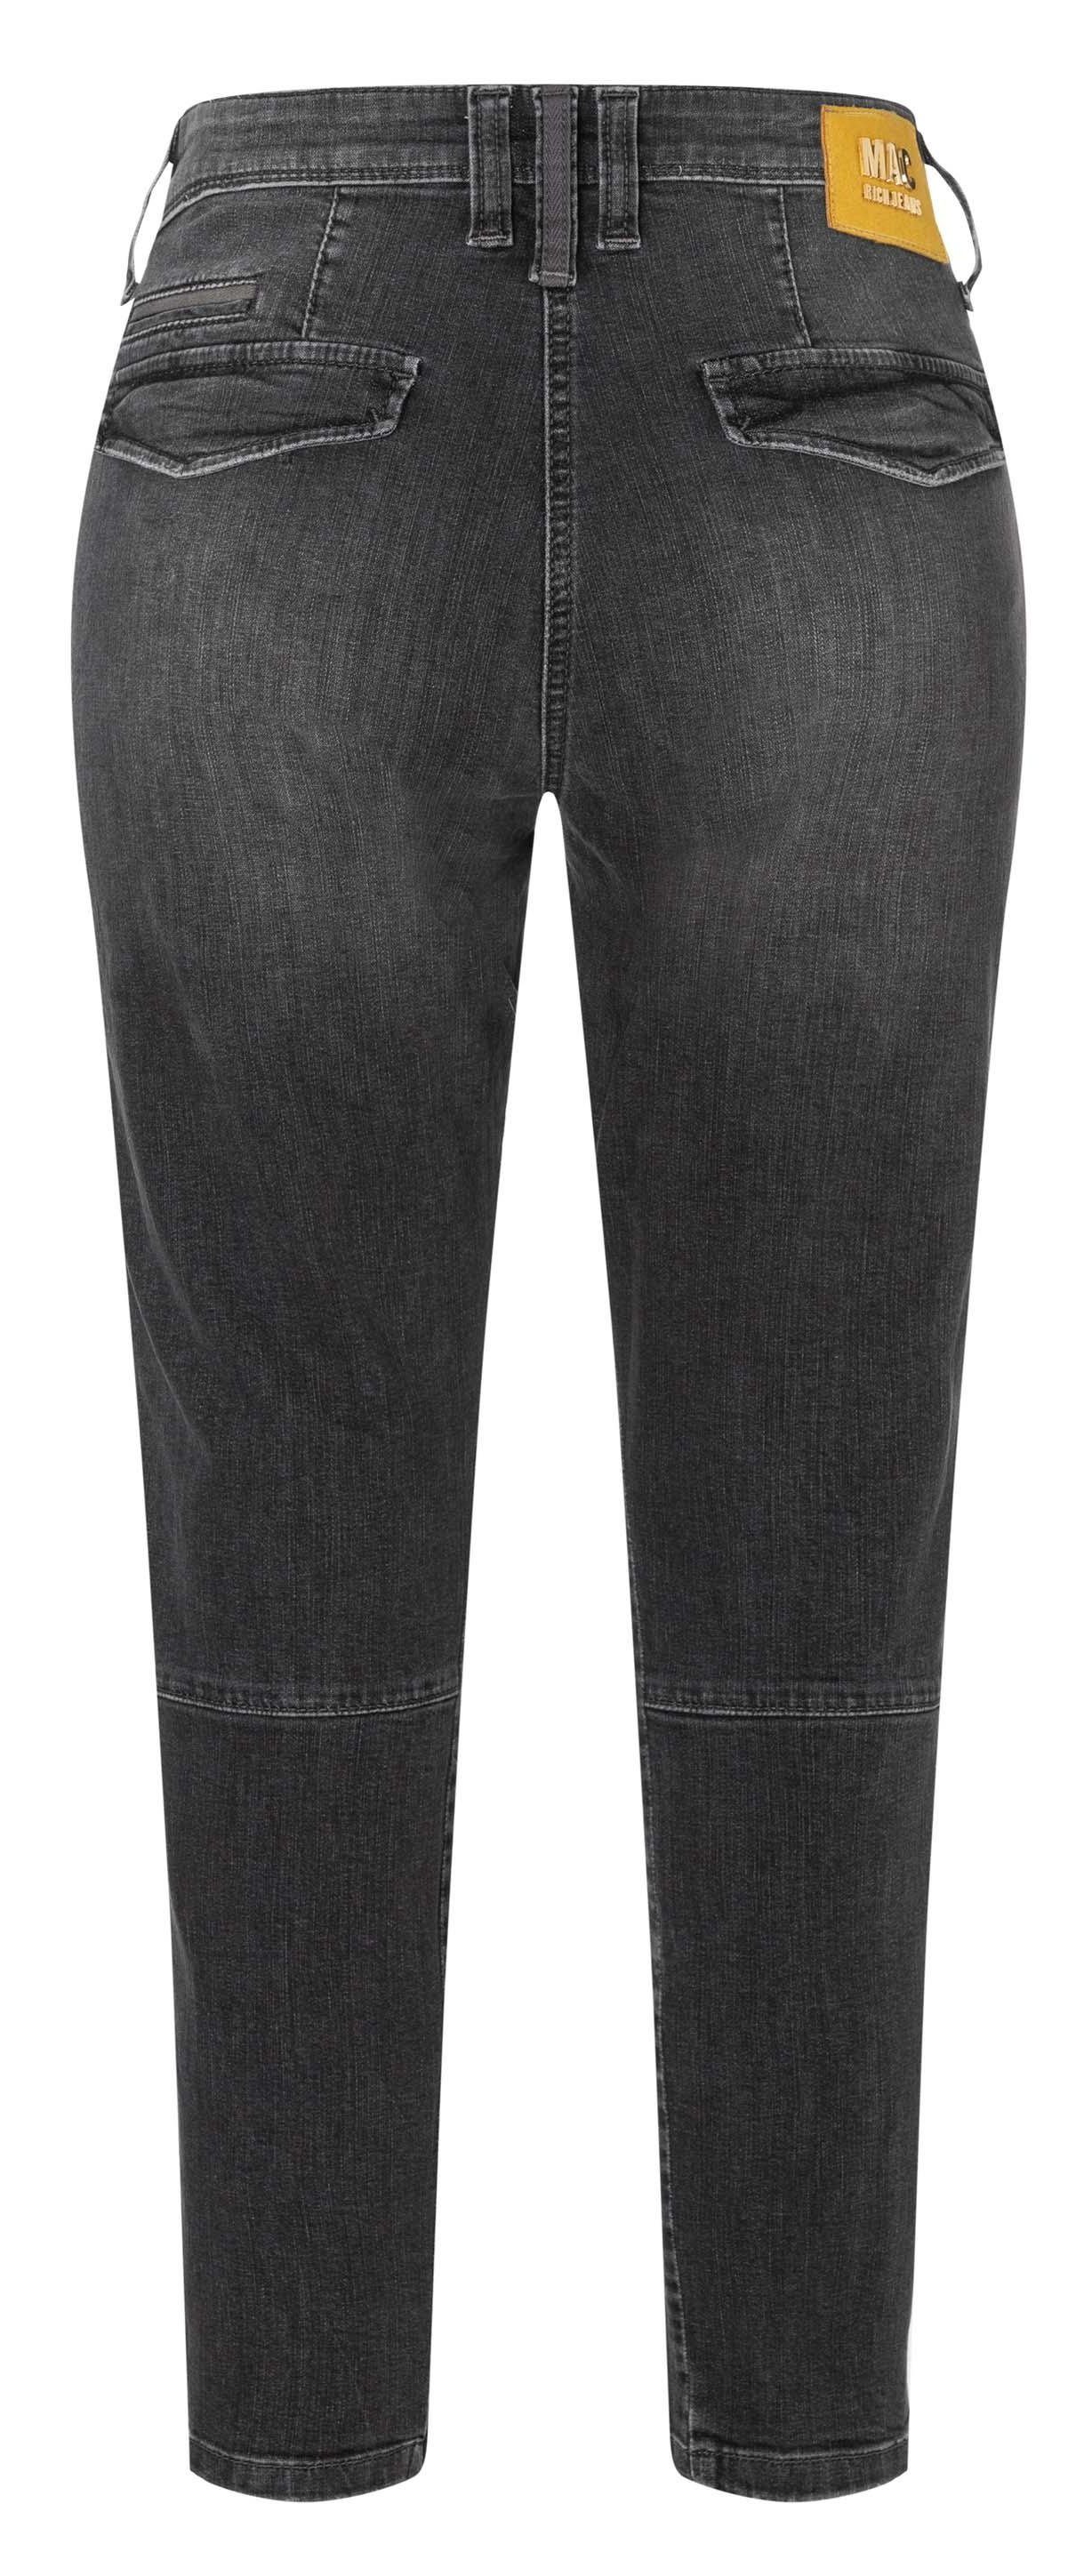 MAC Stretch-Jeans D928 grey MAC used 2377-97-0398L black RICH